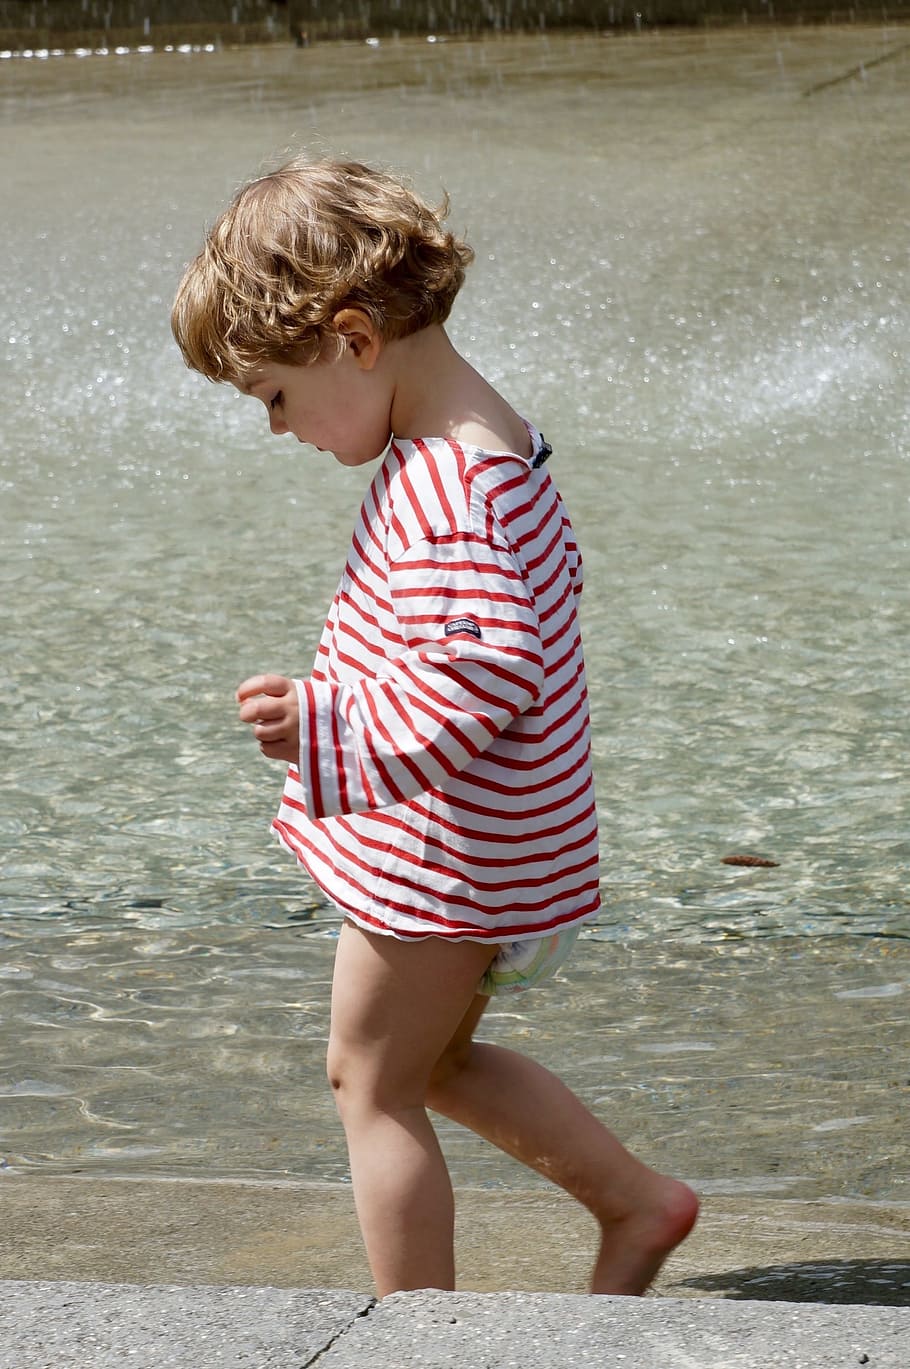 HD wallpaper: Water Basin, Small, Child, small child, barefoot, paddling |  Wallpaper Flare